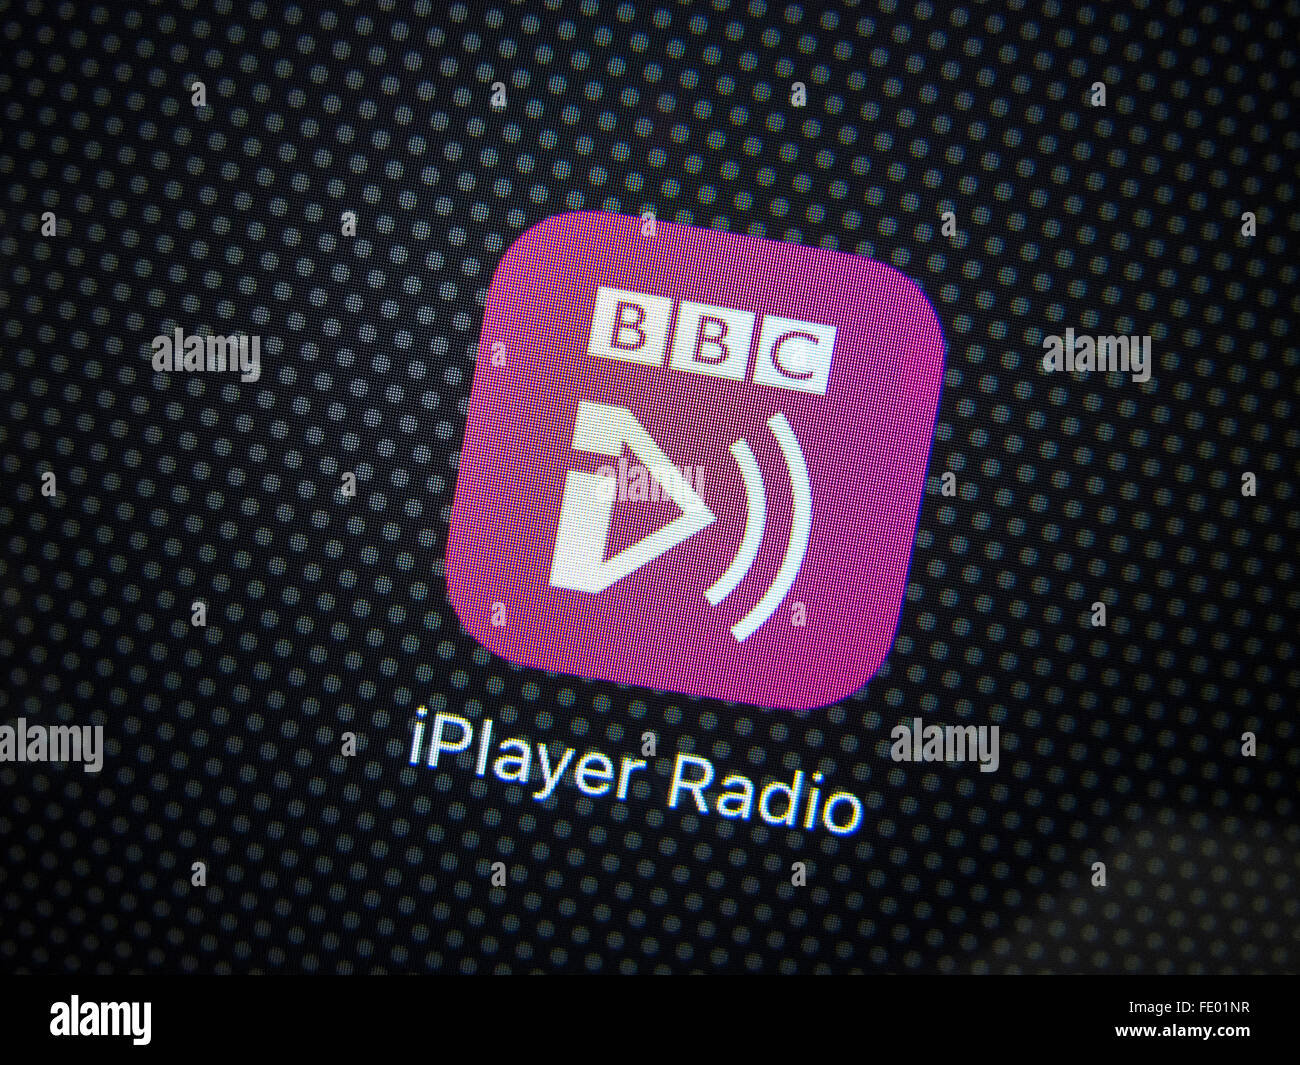 BBC IPlayer Radio streaming app on an iPhone 6 Plus smart phone Stock Photo